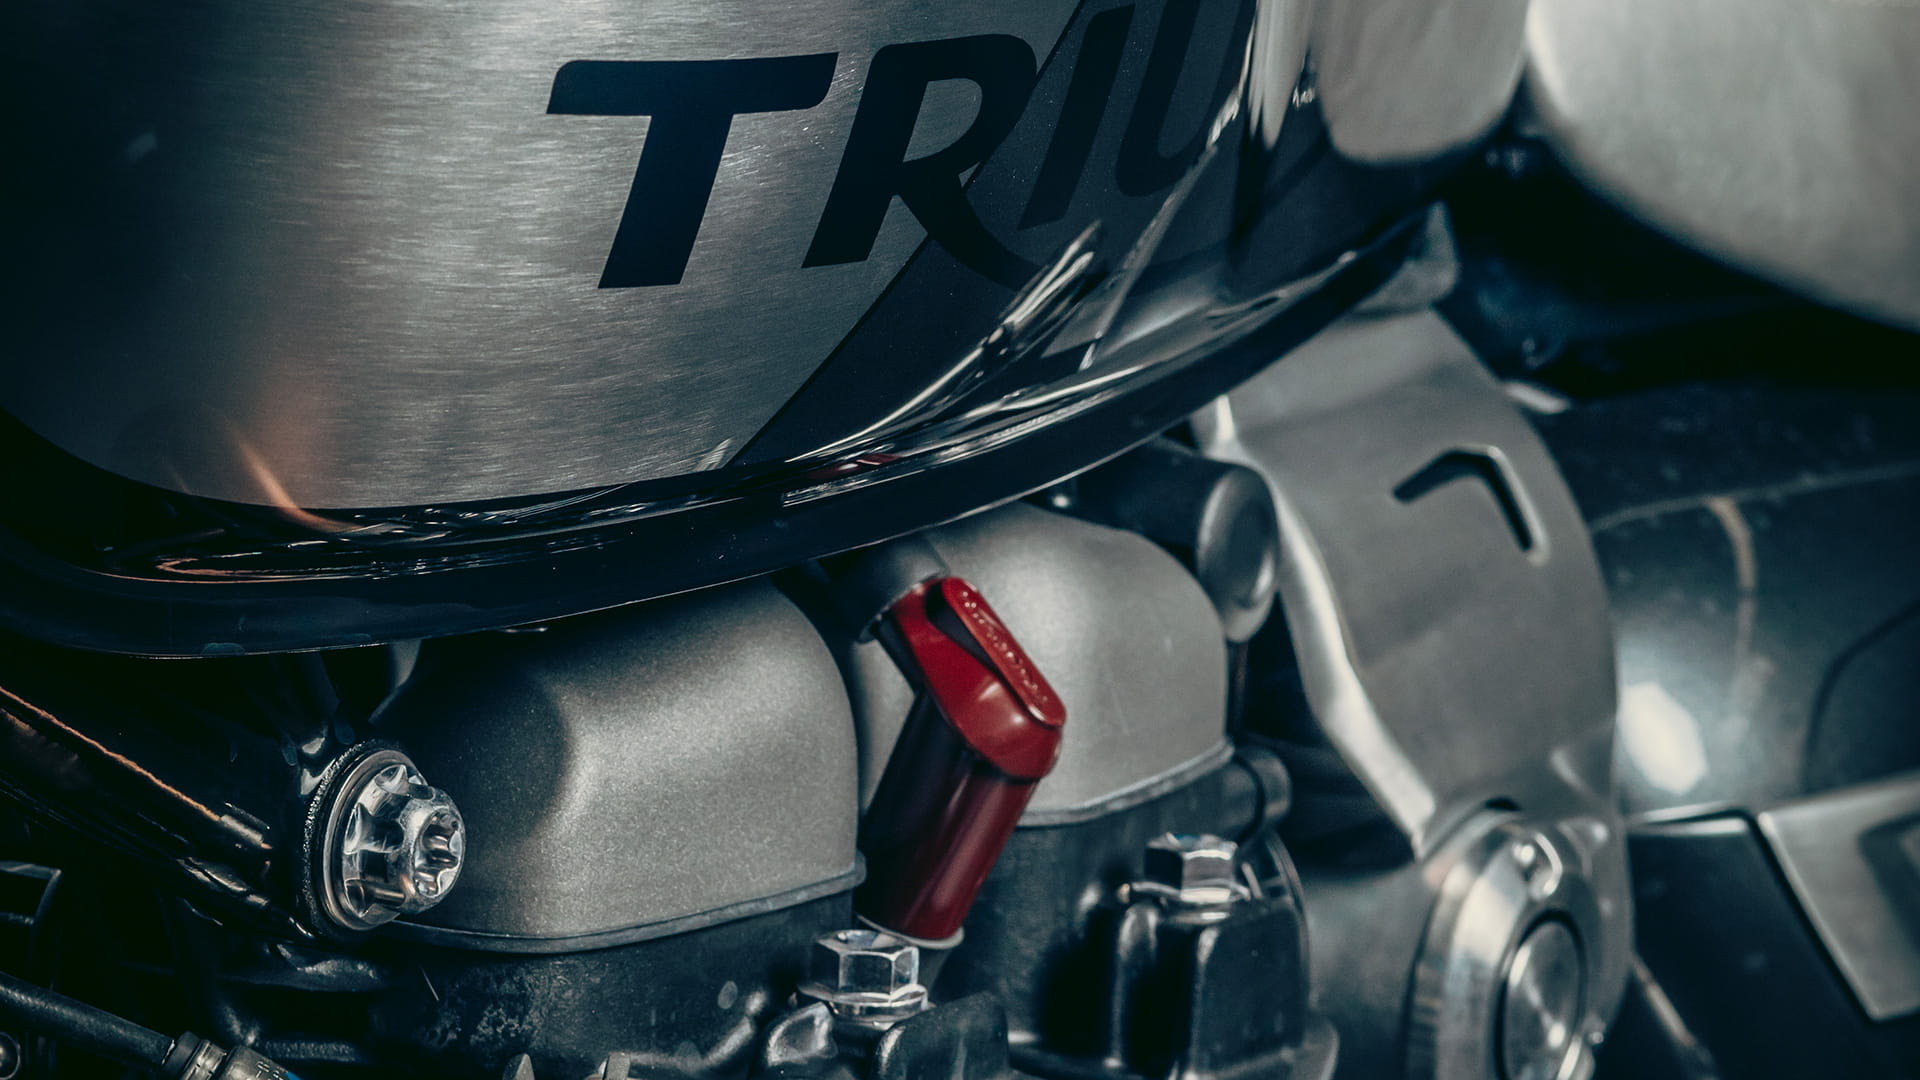 Triumph FR Speed Twin Project